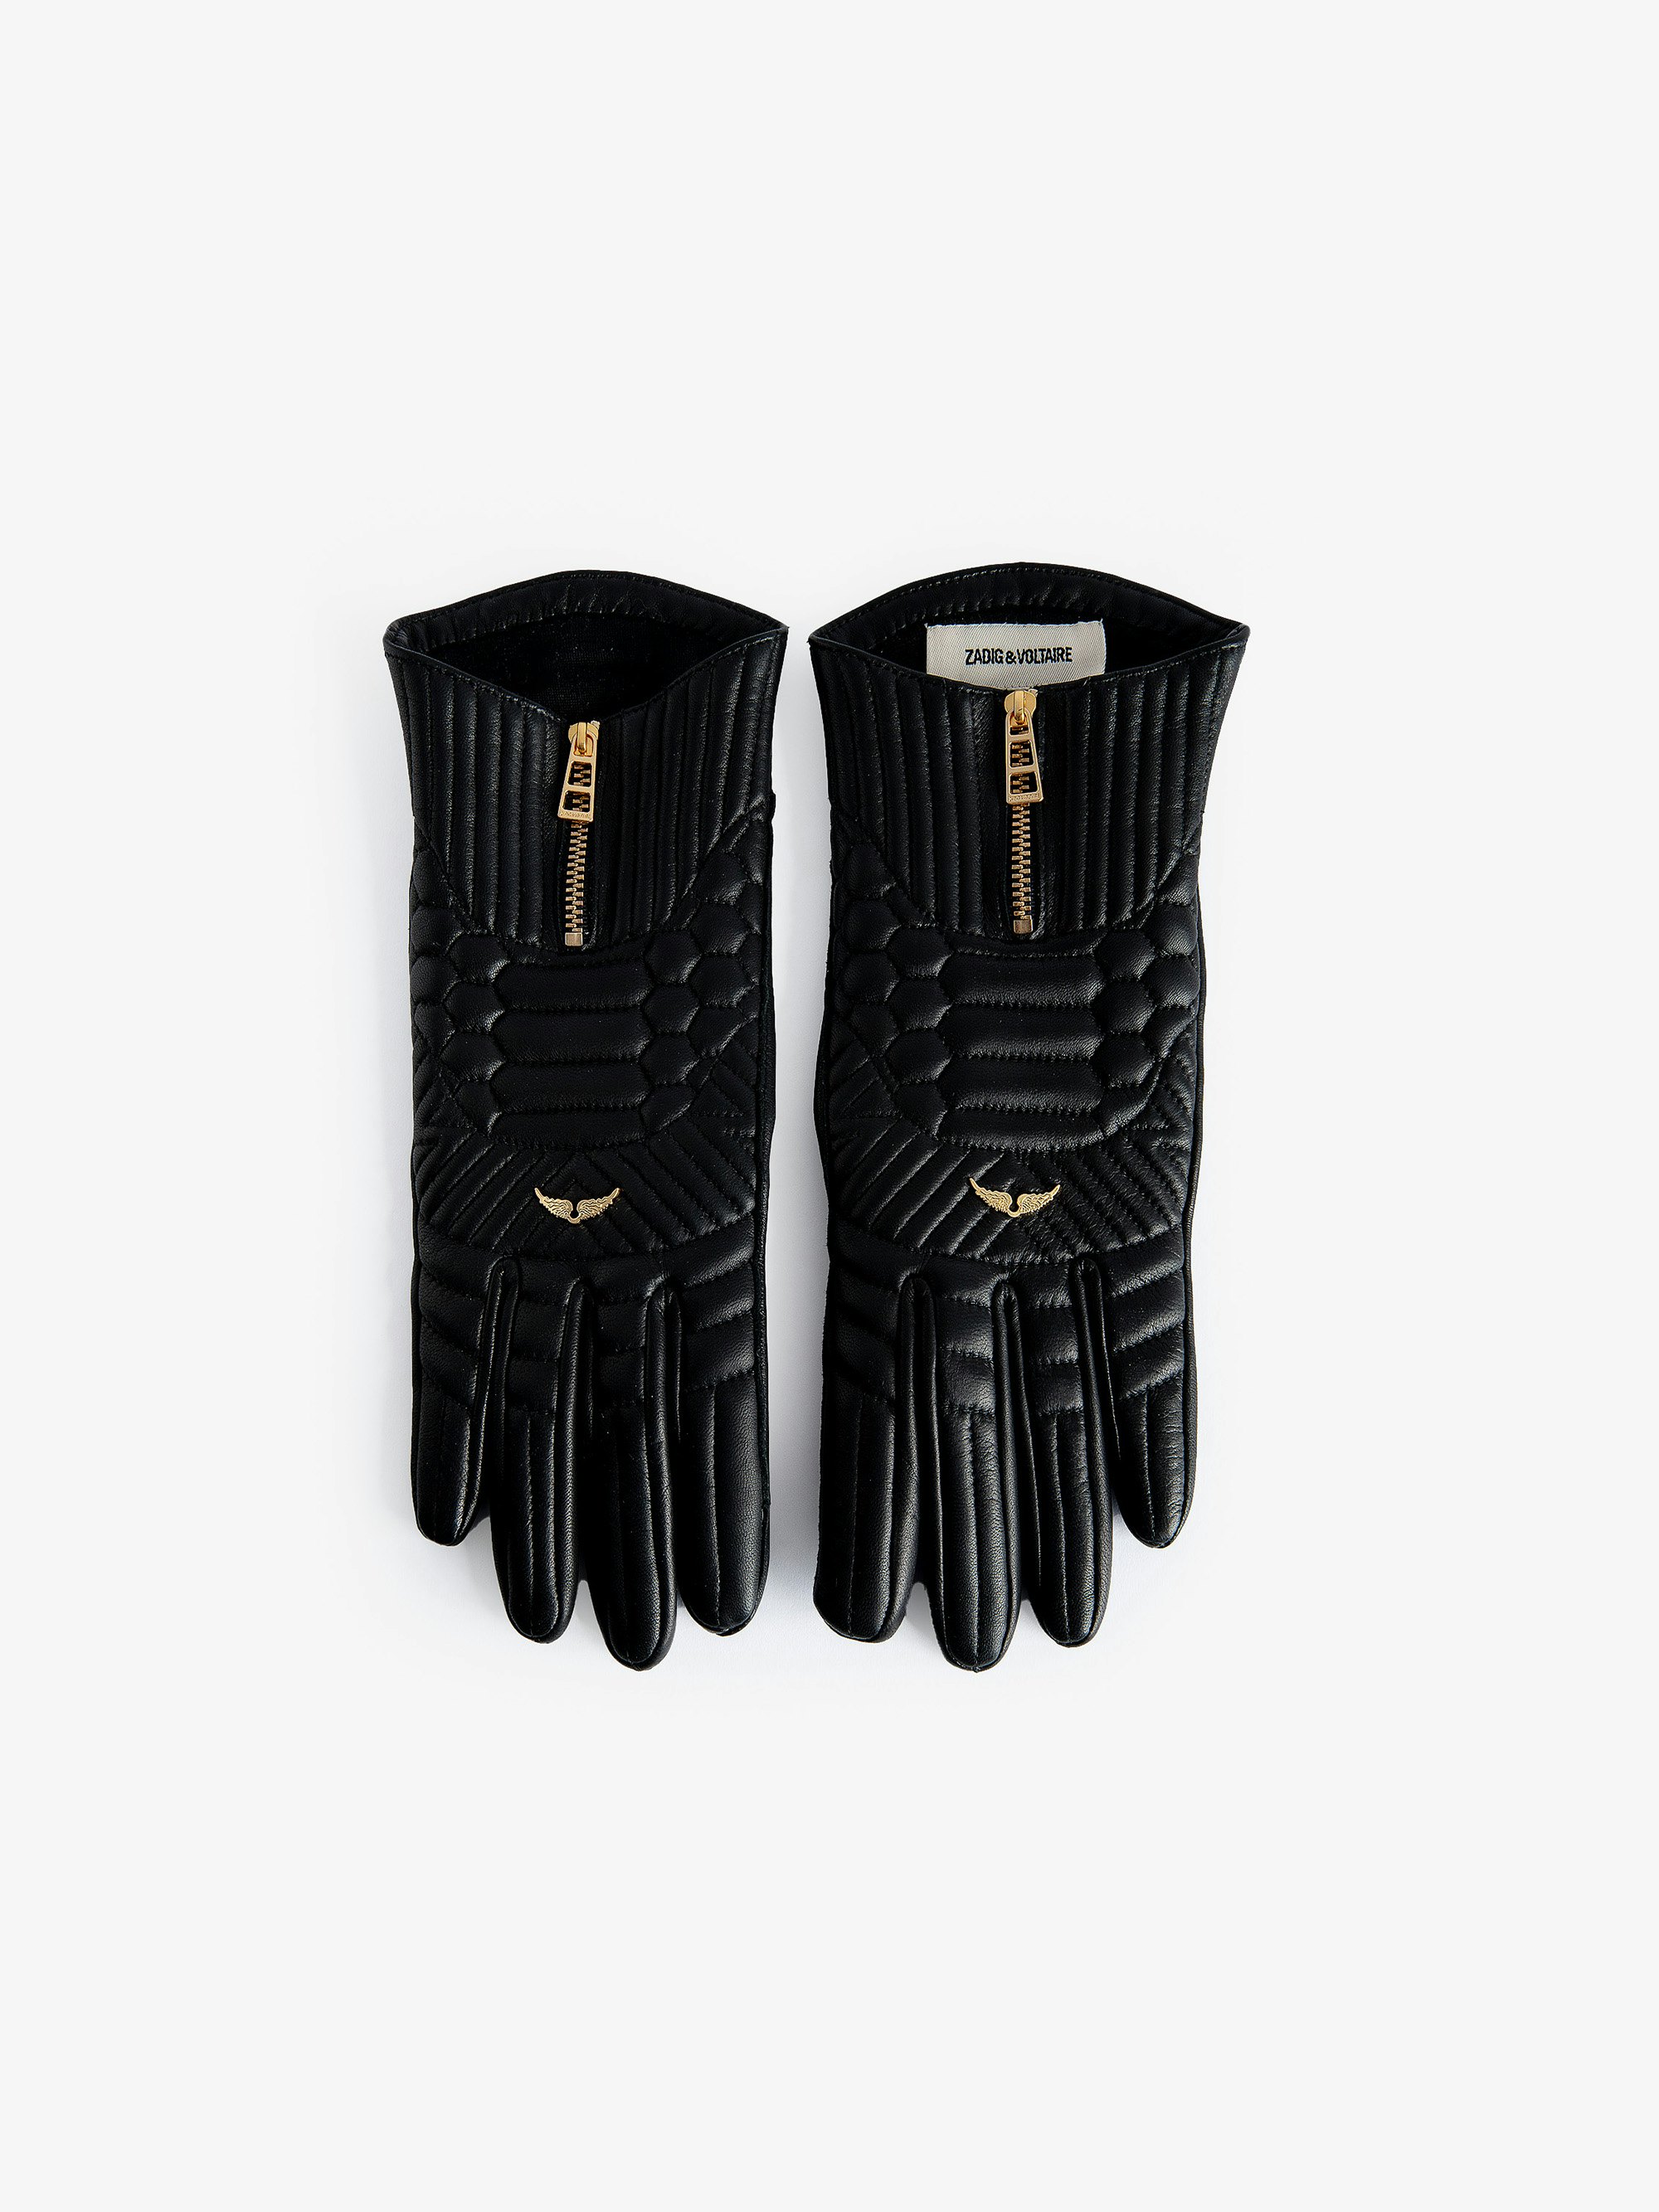 Handschuhe Out Of Hands - Schwarze, gesteppte Glattlederhandschuhe Voltaire Vice, die in den Werkstätten des berühmten Handschuhmachers Agnelle gefertigt wurden.